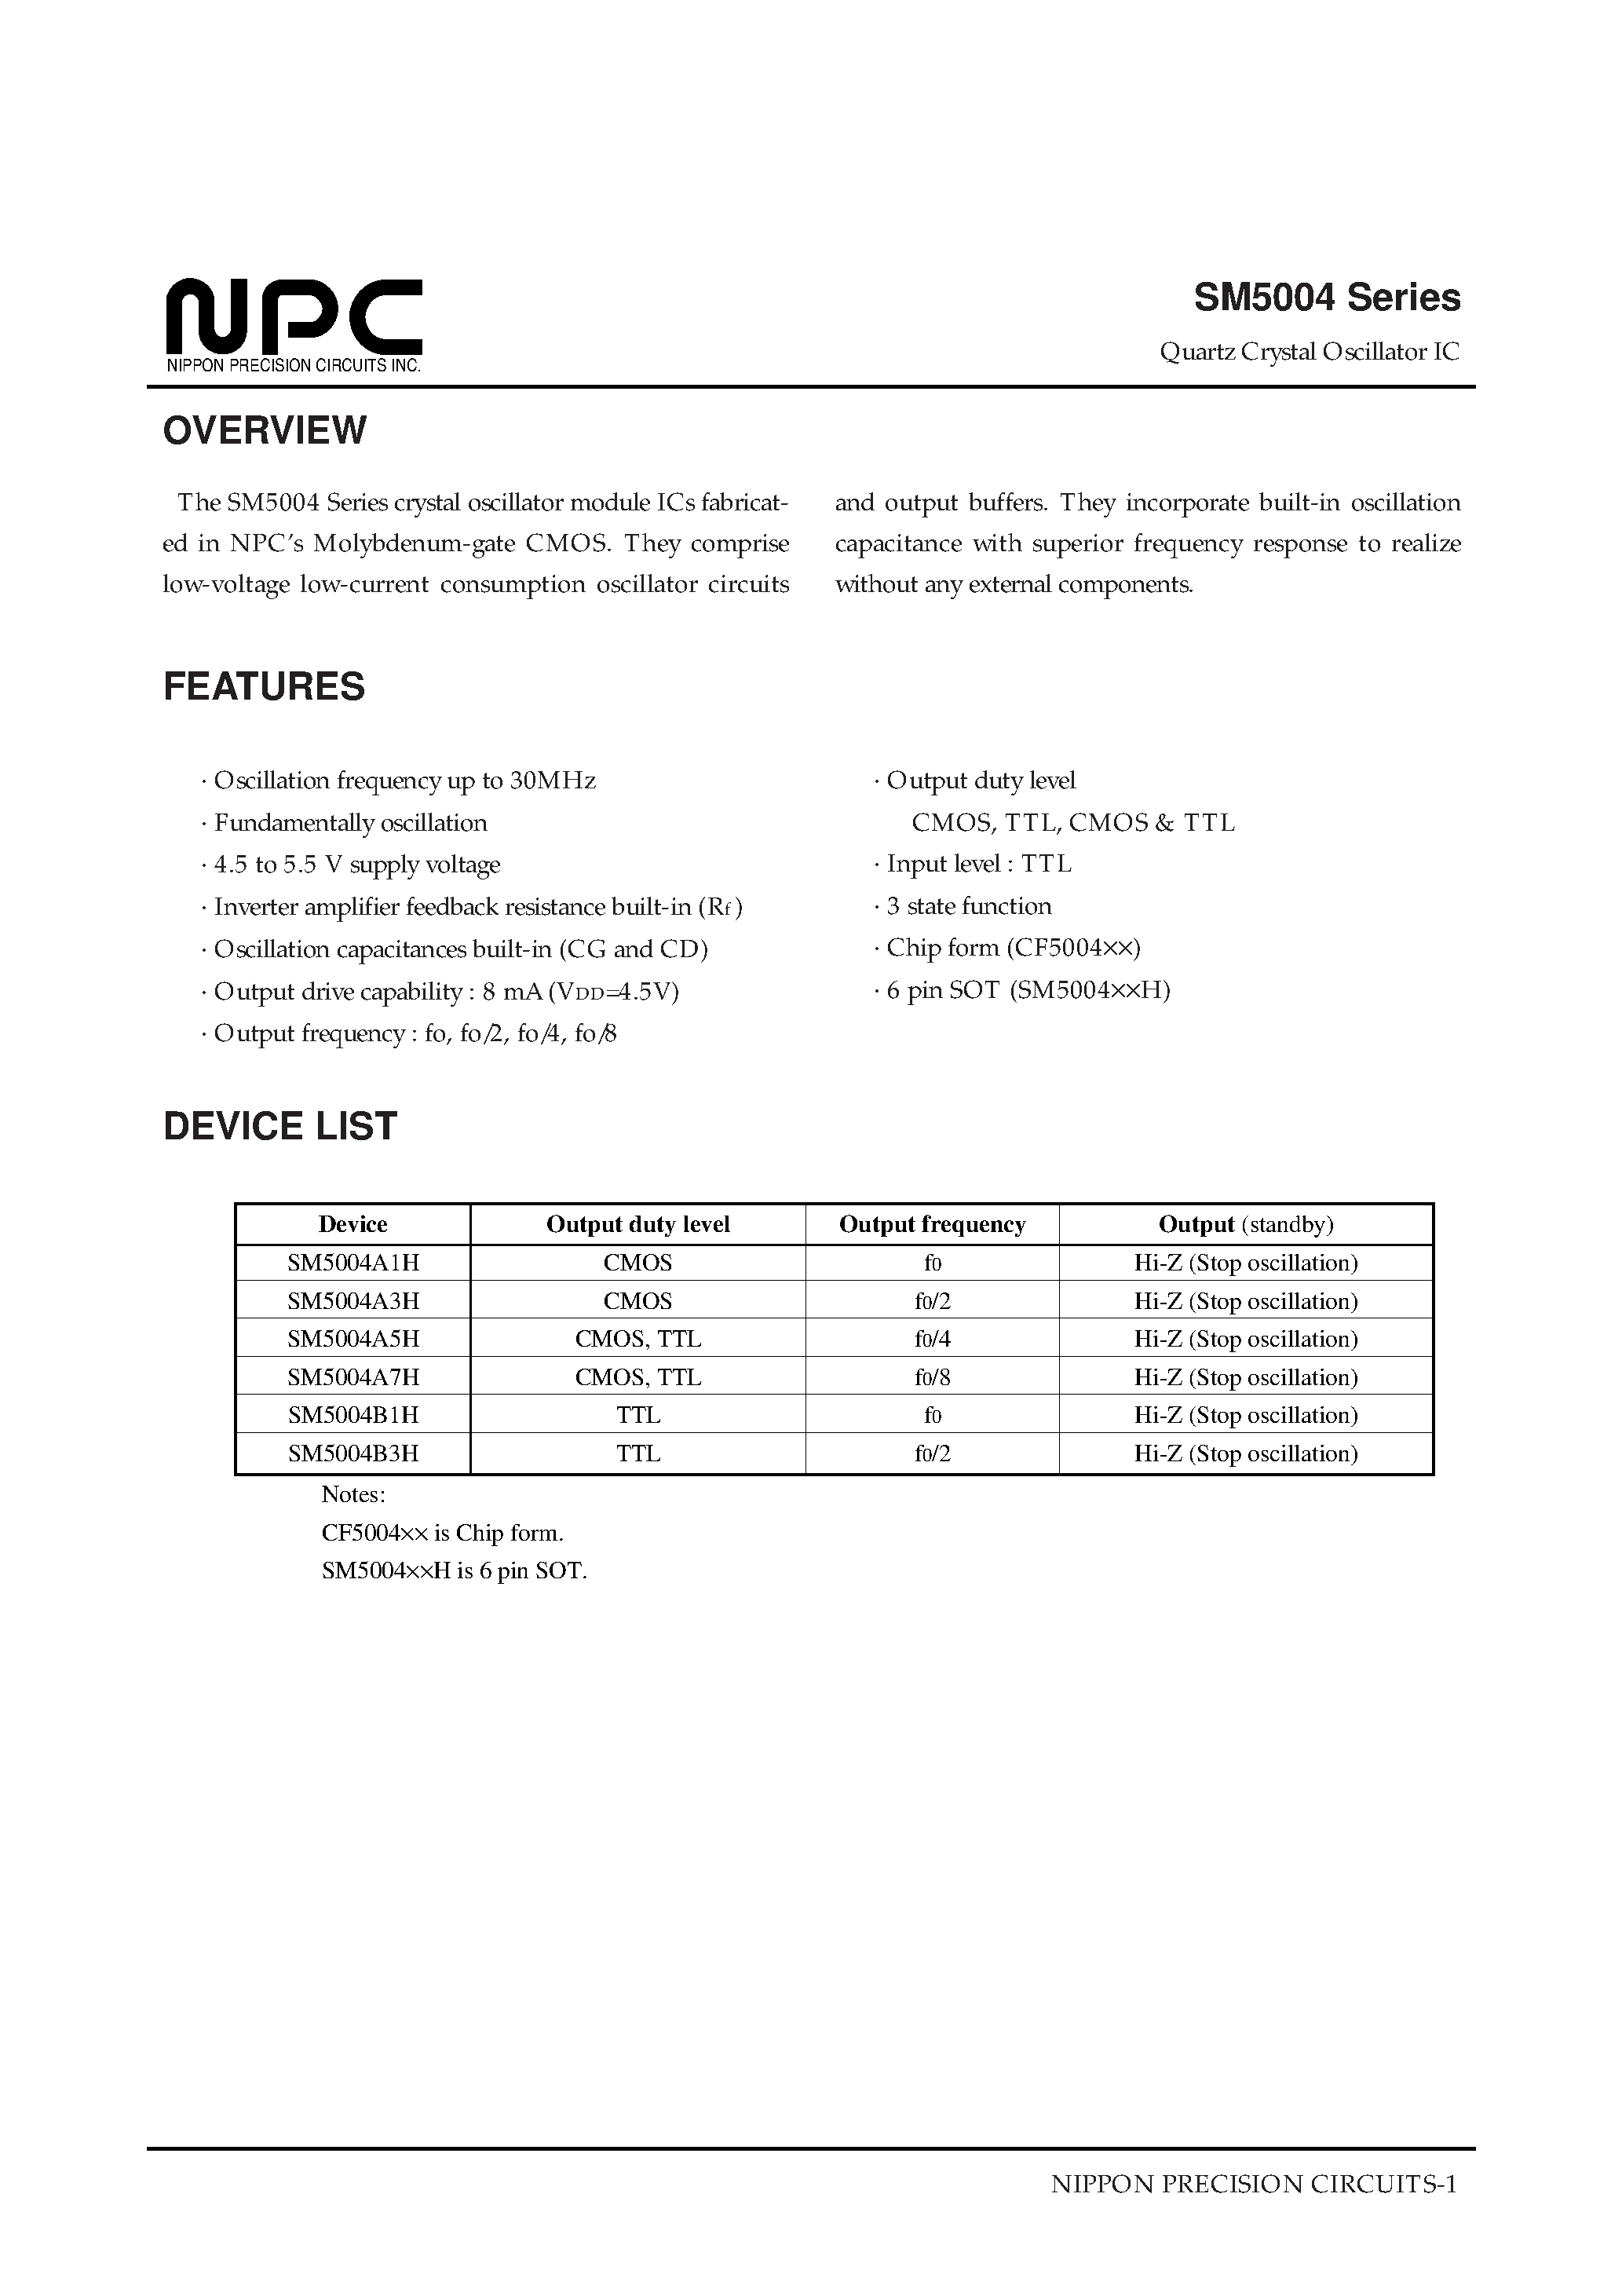 Datasheet SM5004A7H - Quartz Crystal Oscillator IC page 1